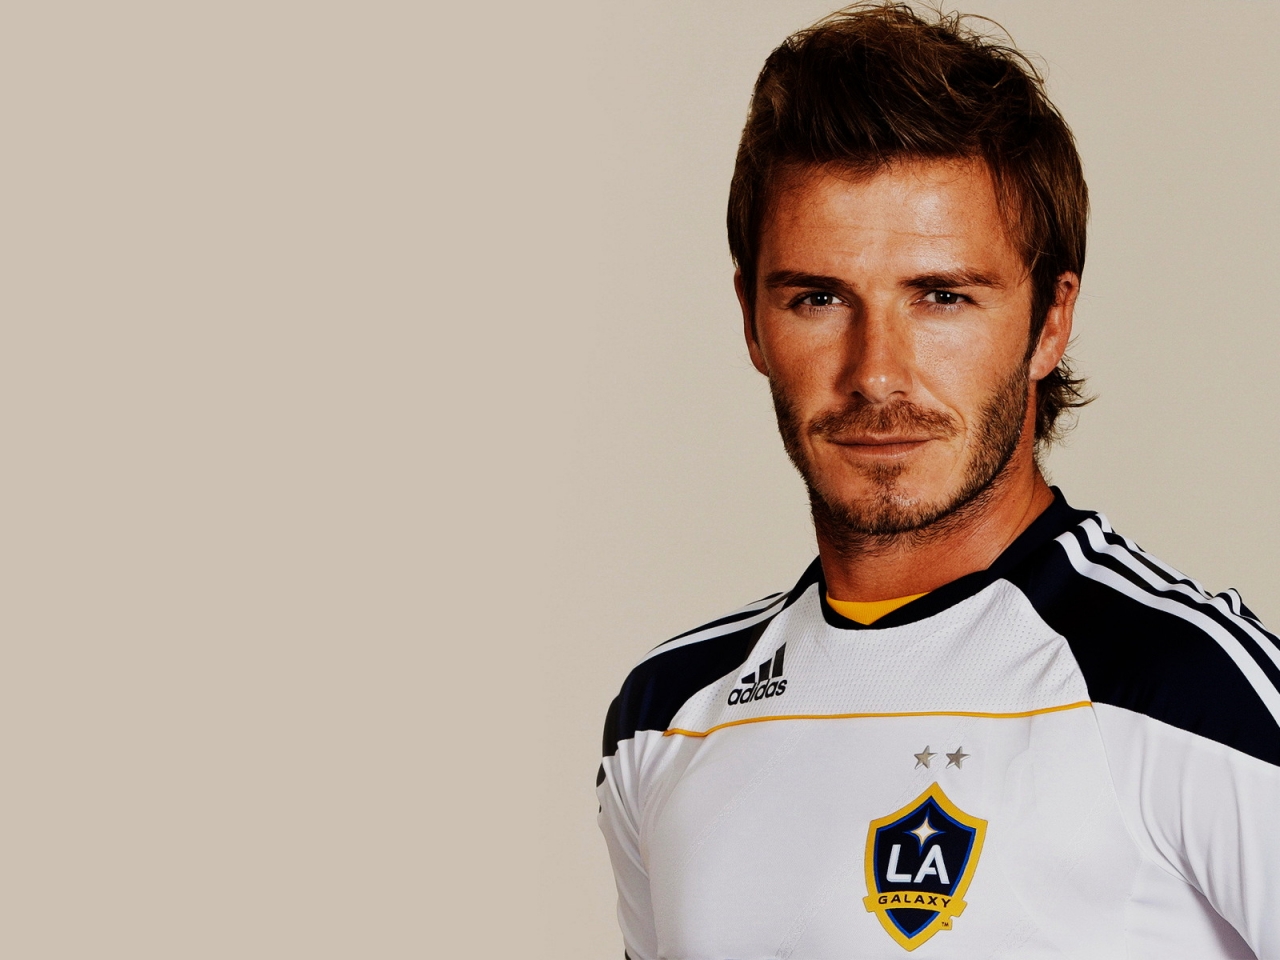 David Beckham Smile for 1280 x 960 resolution